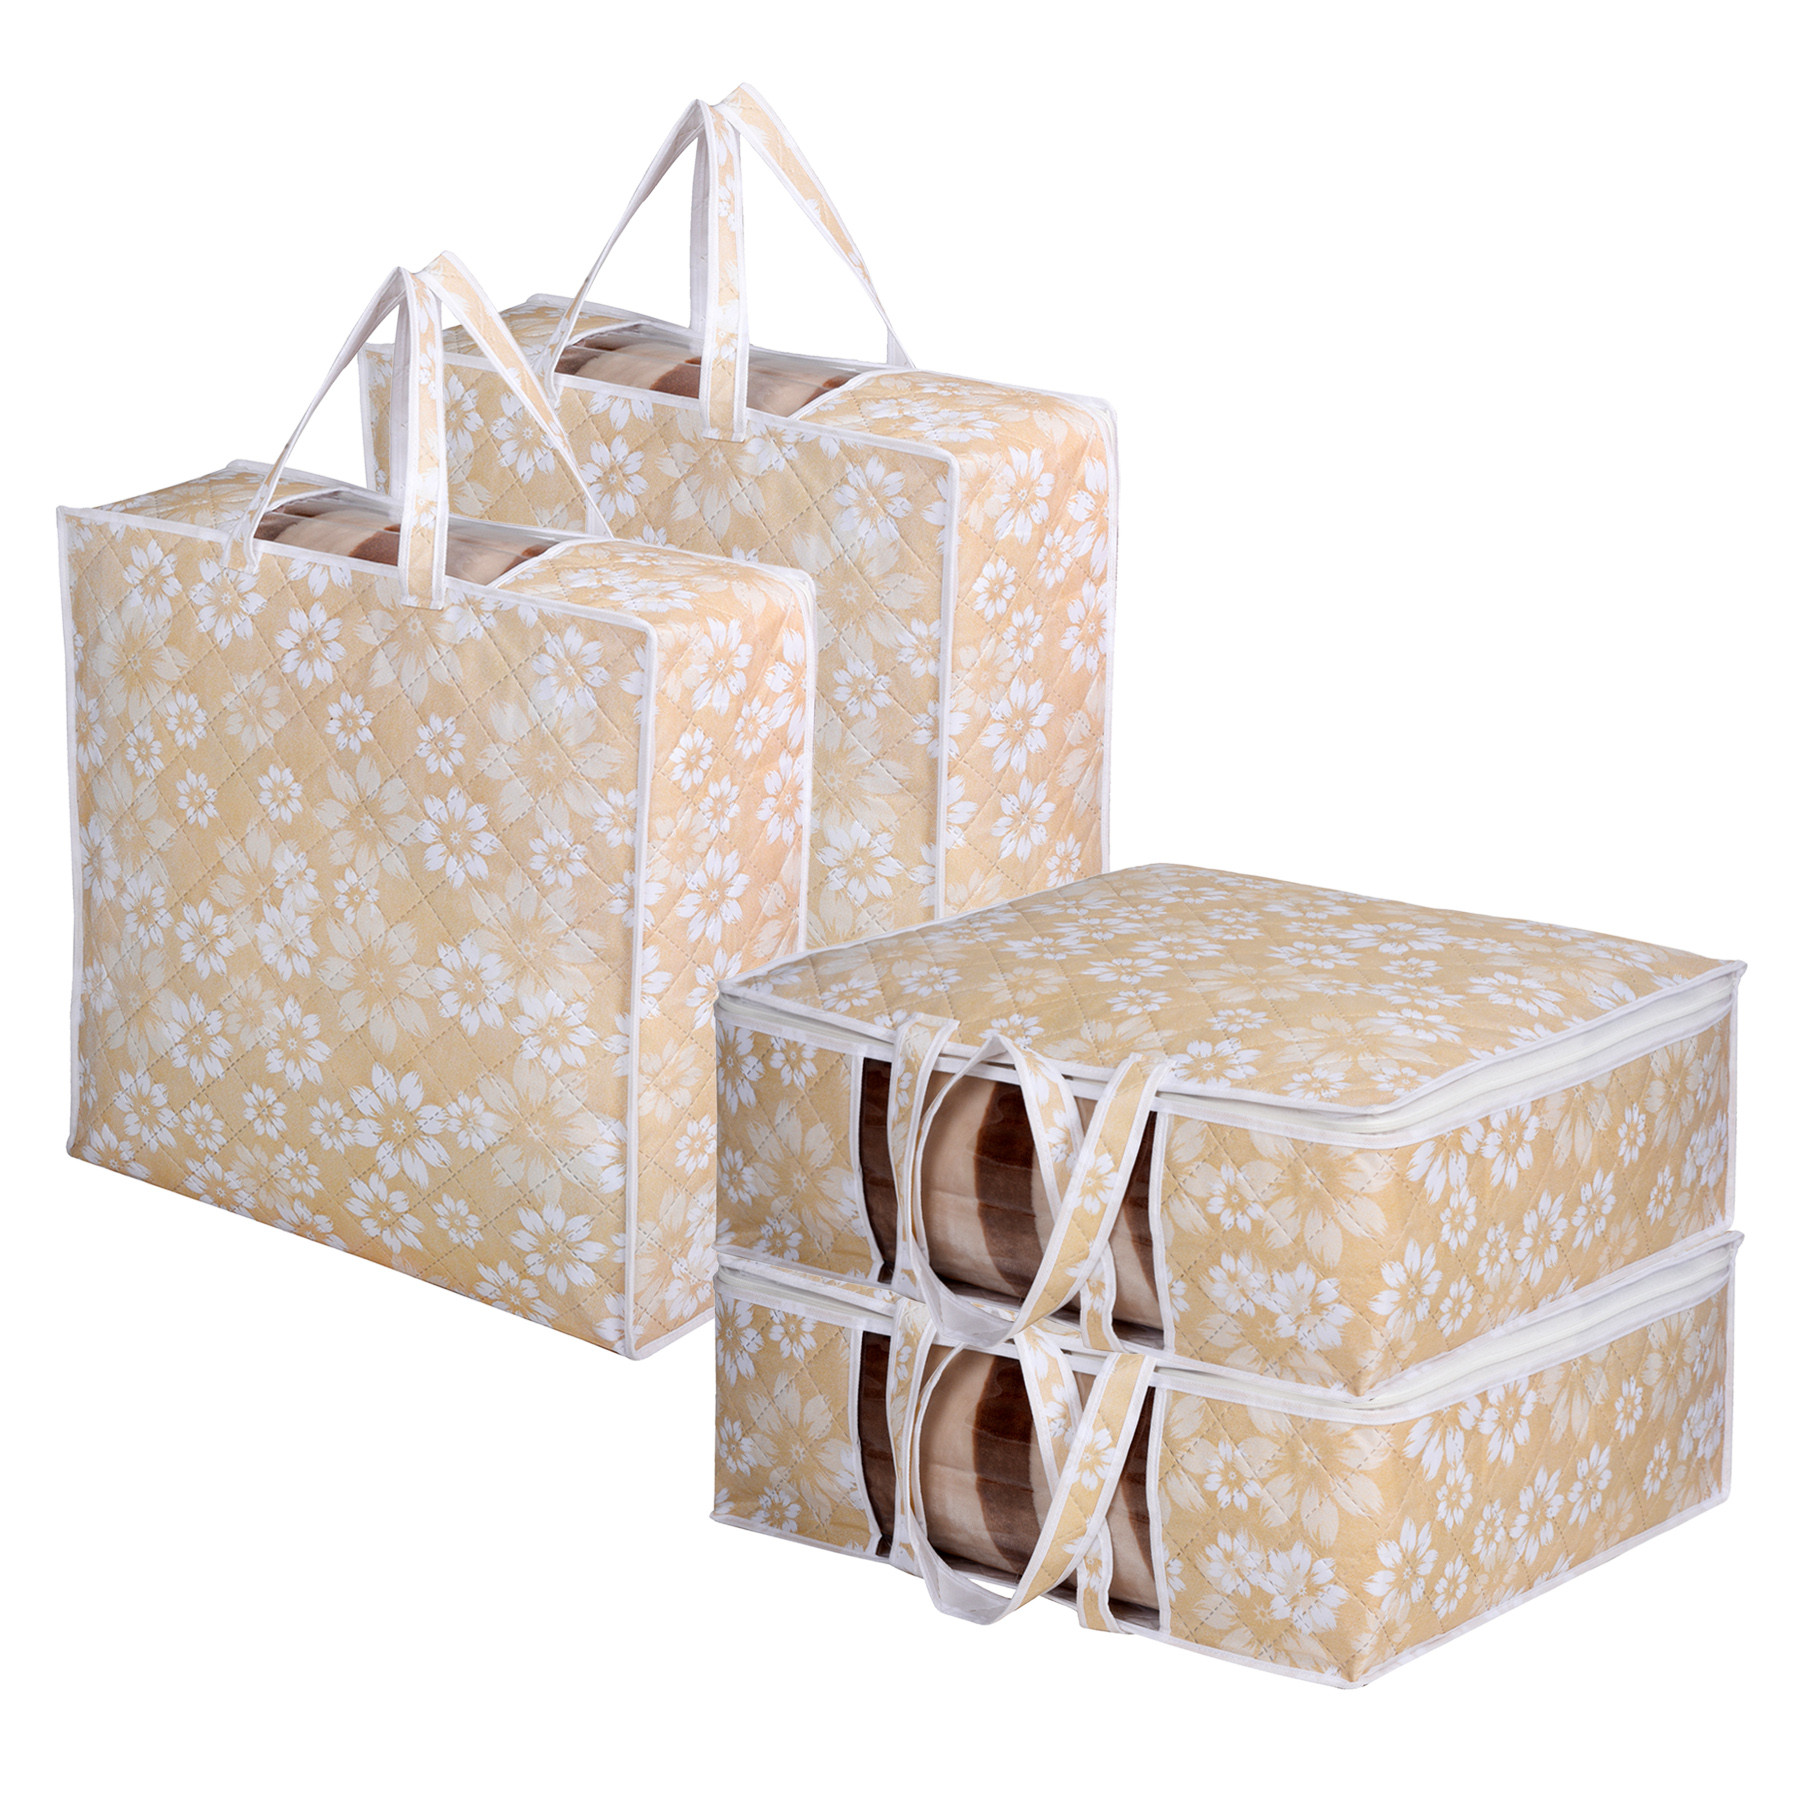 Kuber Industries Underbed Storage Bag | Clothes Storage Organizer | Visible Window Wardrobe Bag | Closet Organization with Handle | Flower Printed Storage Bag | Pack of 4 | Navy Blue